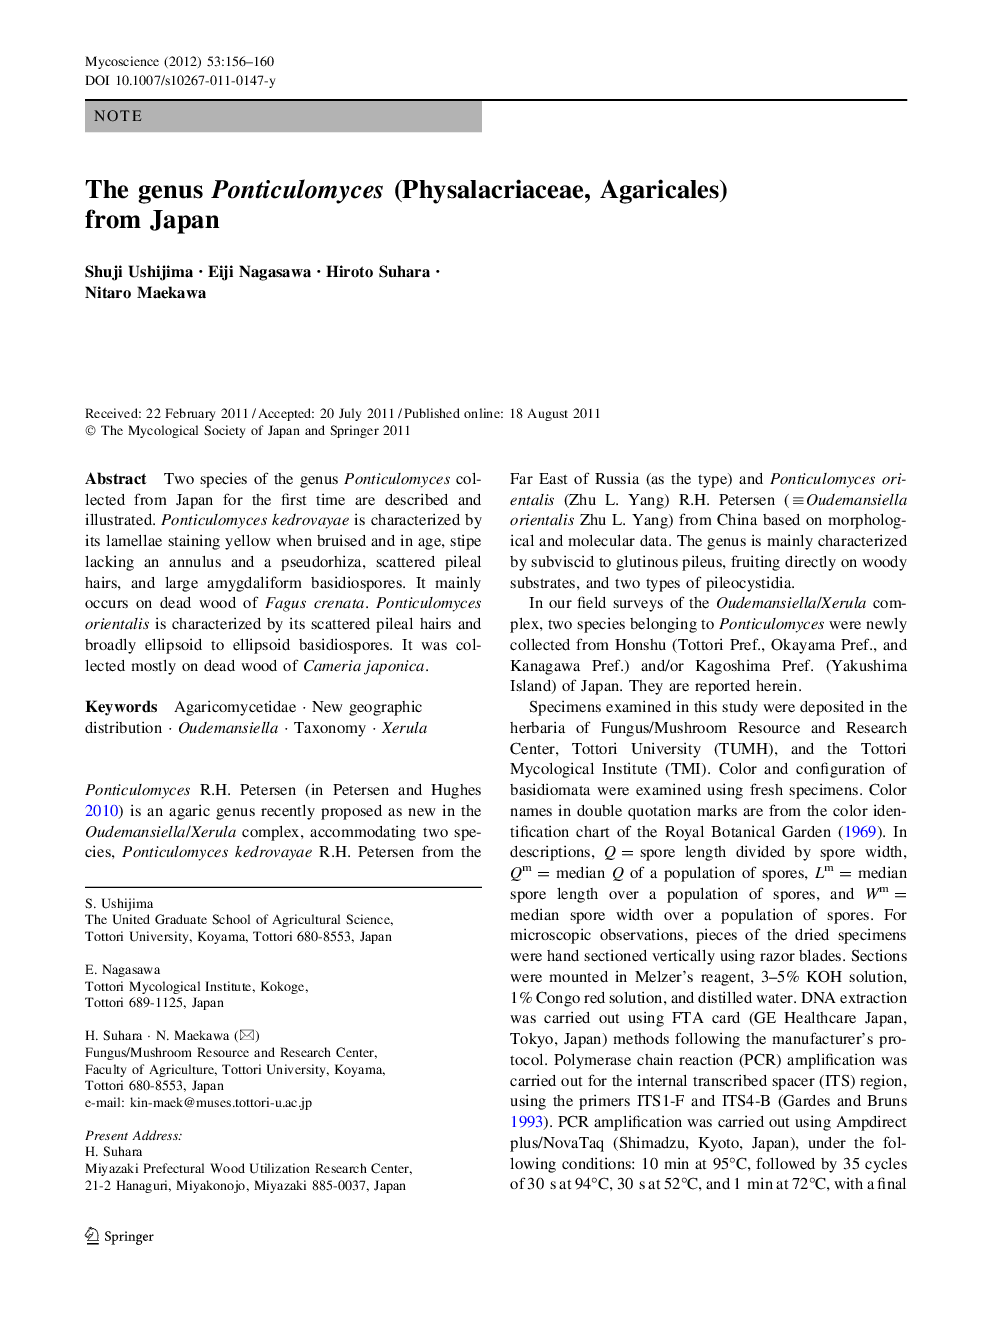 The genus Ponticulomyces (Physalacriaceae, Agaricales) from Japan